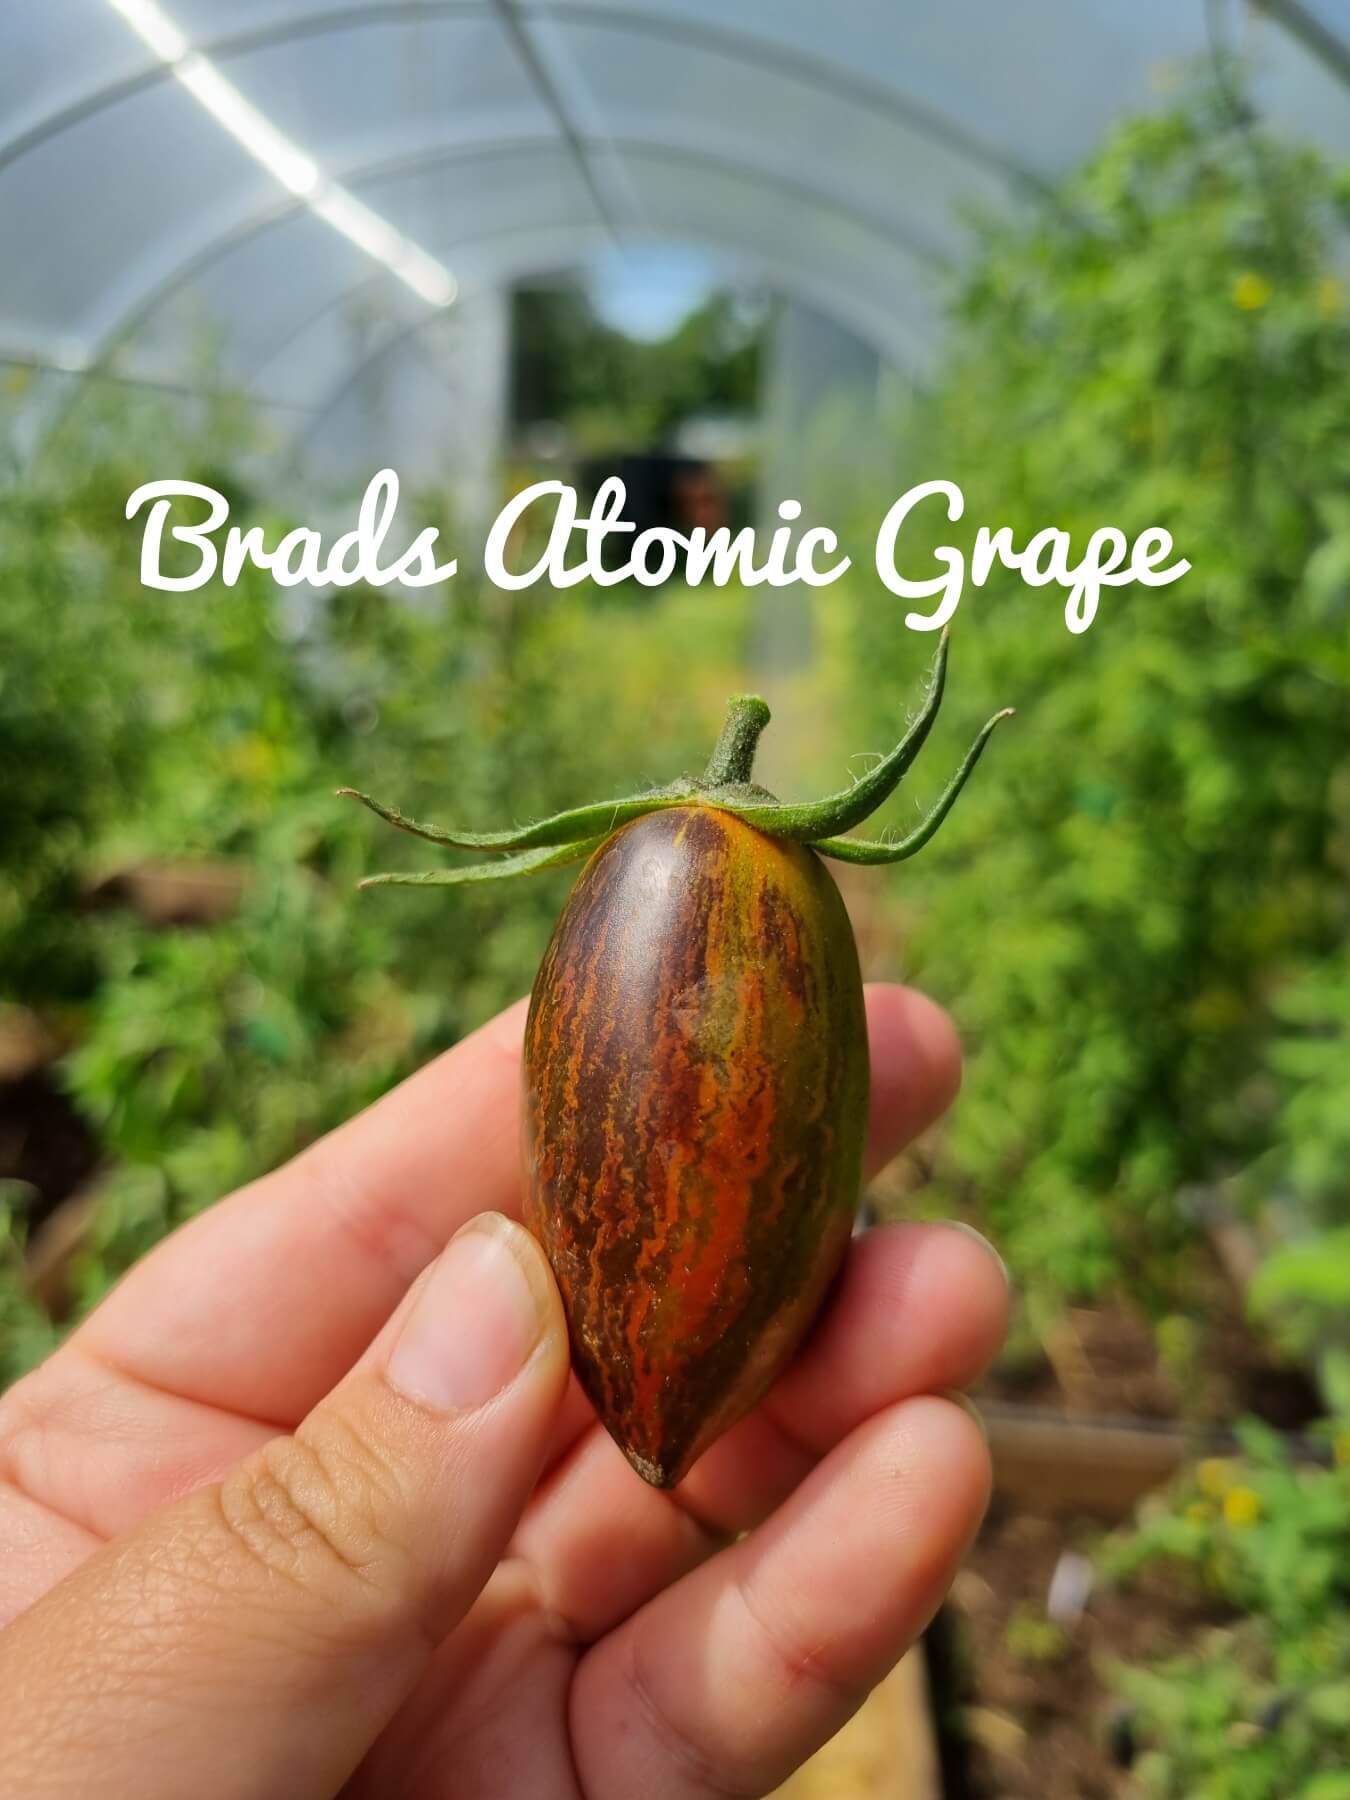 Brads Atomic Grape